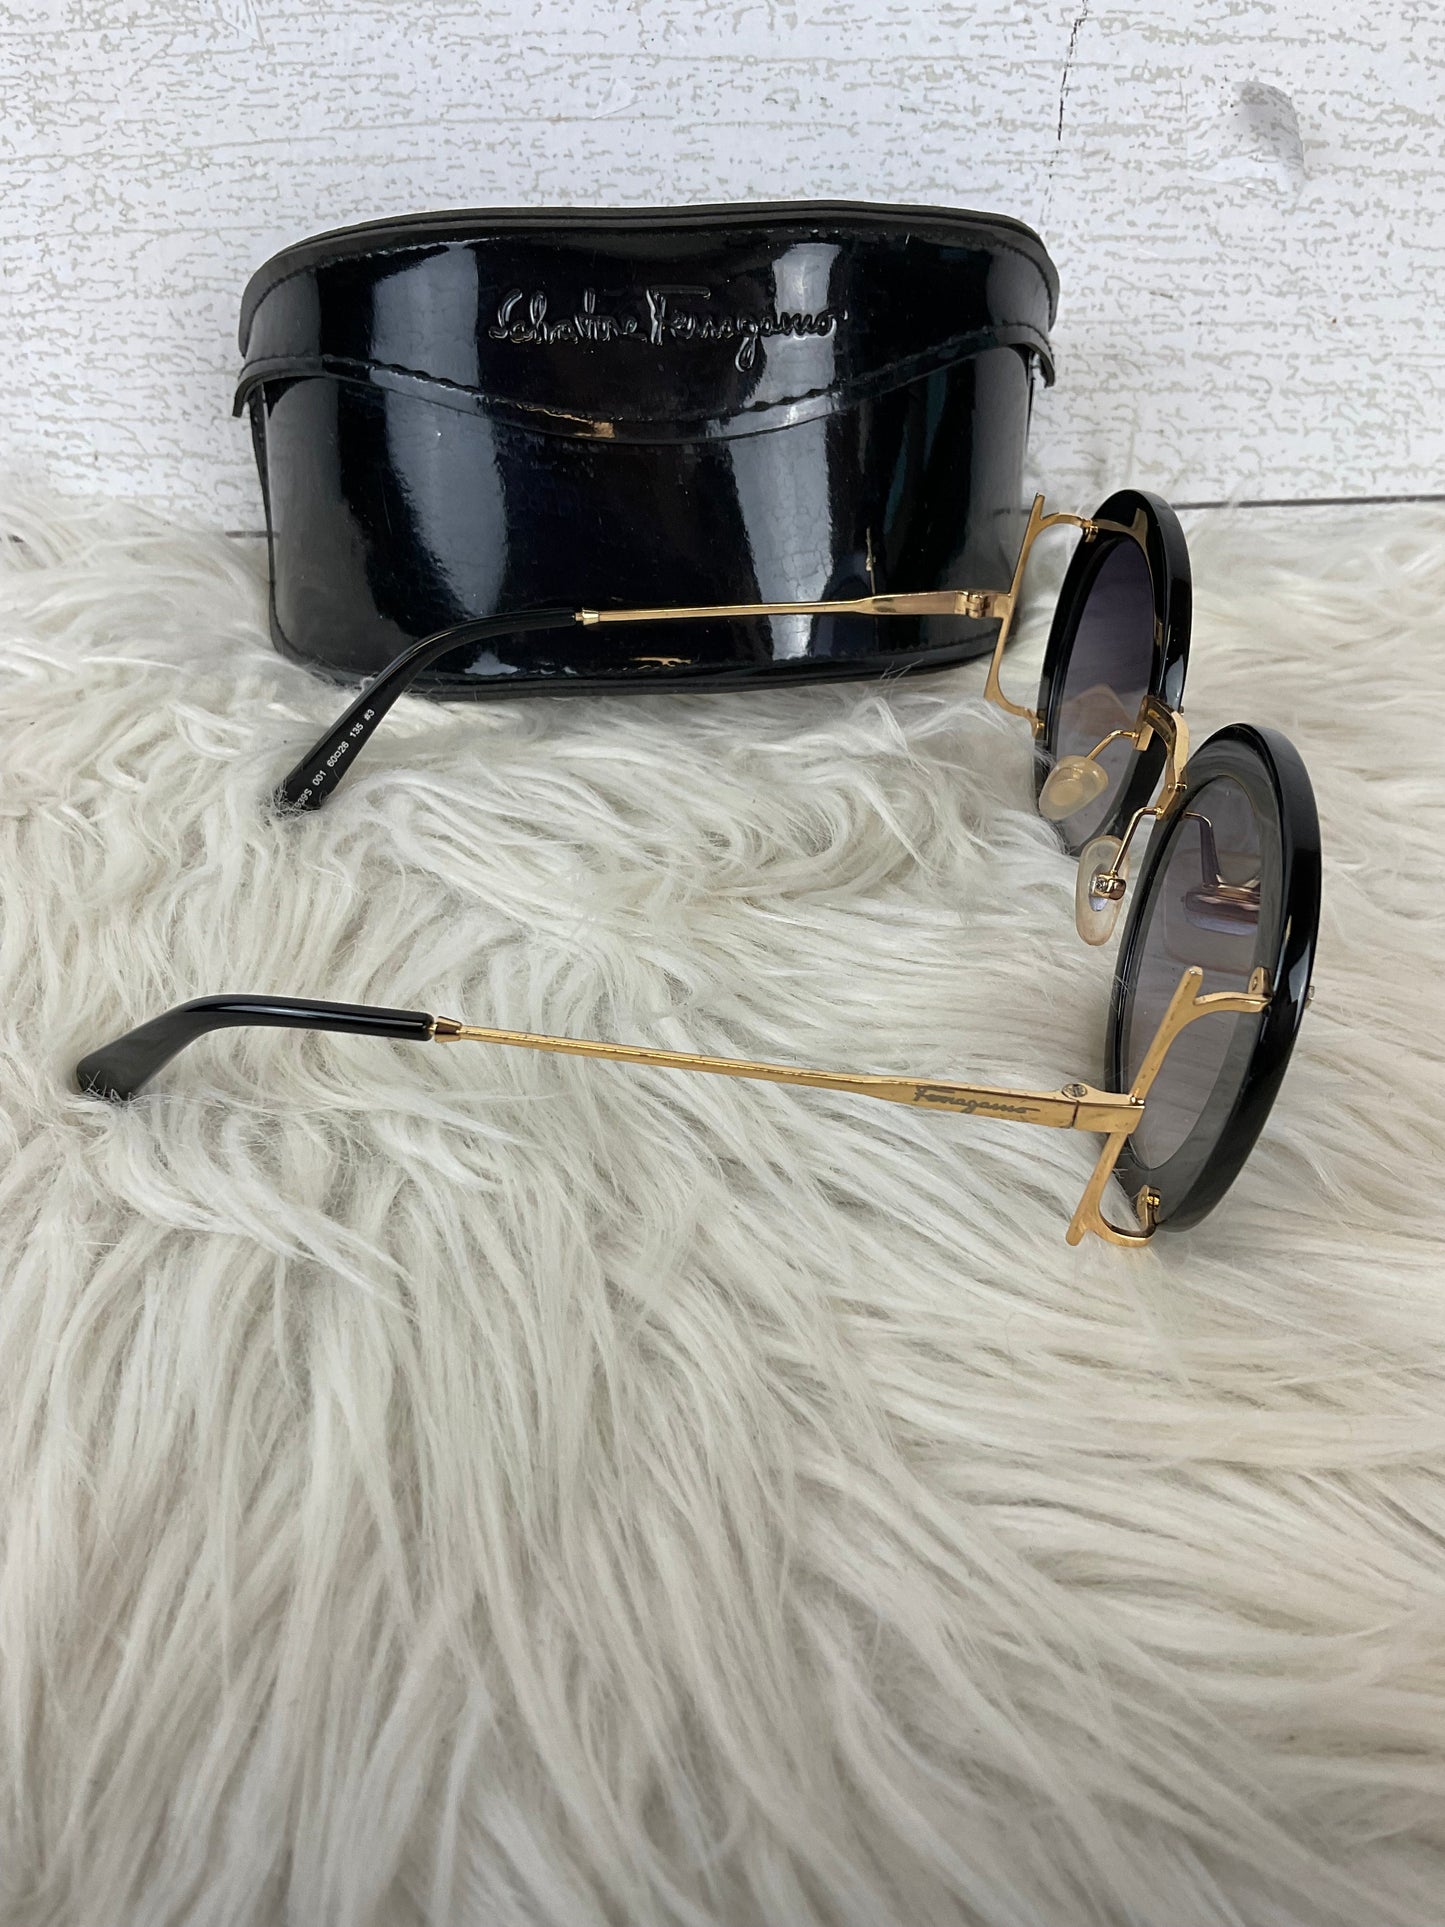 Sunglasses Luxury Designer By Ferragamo